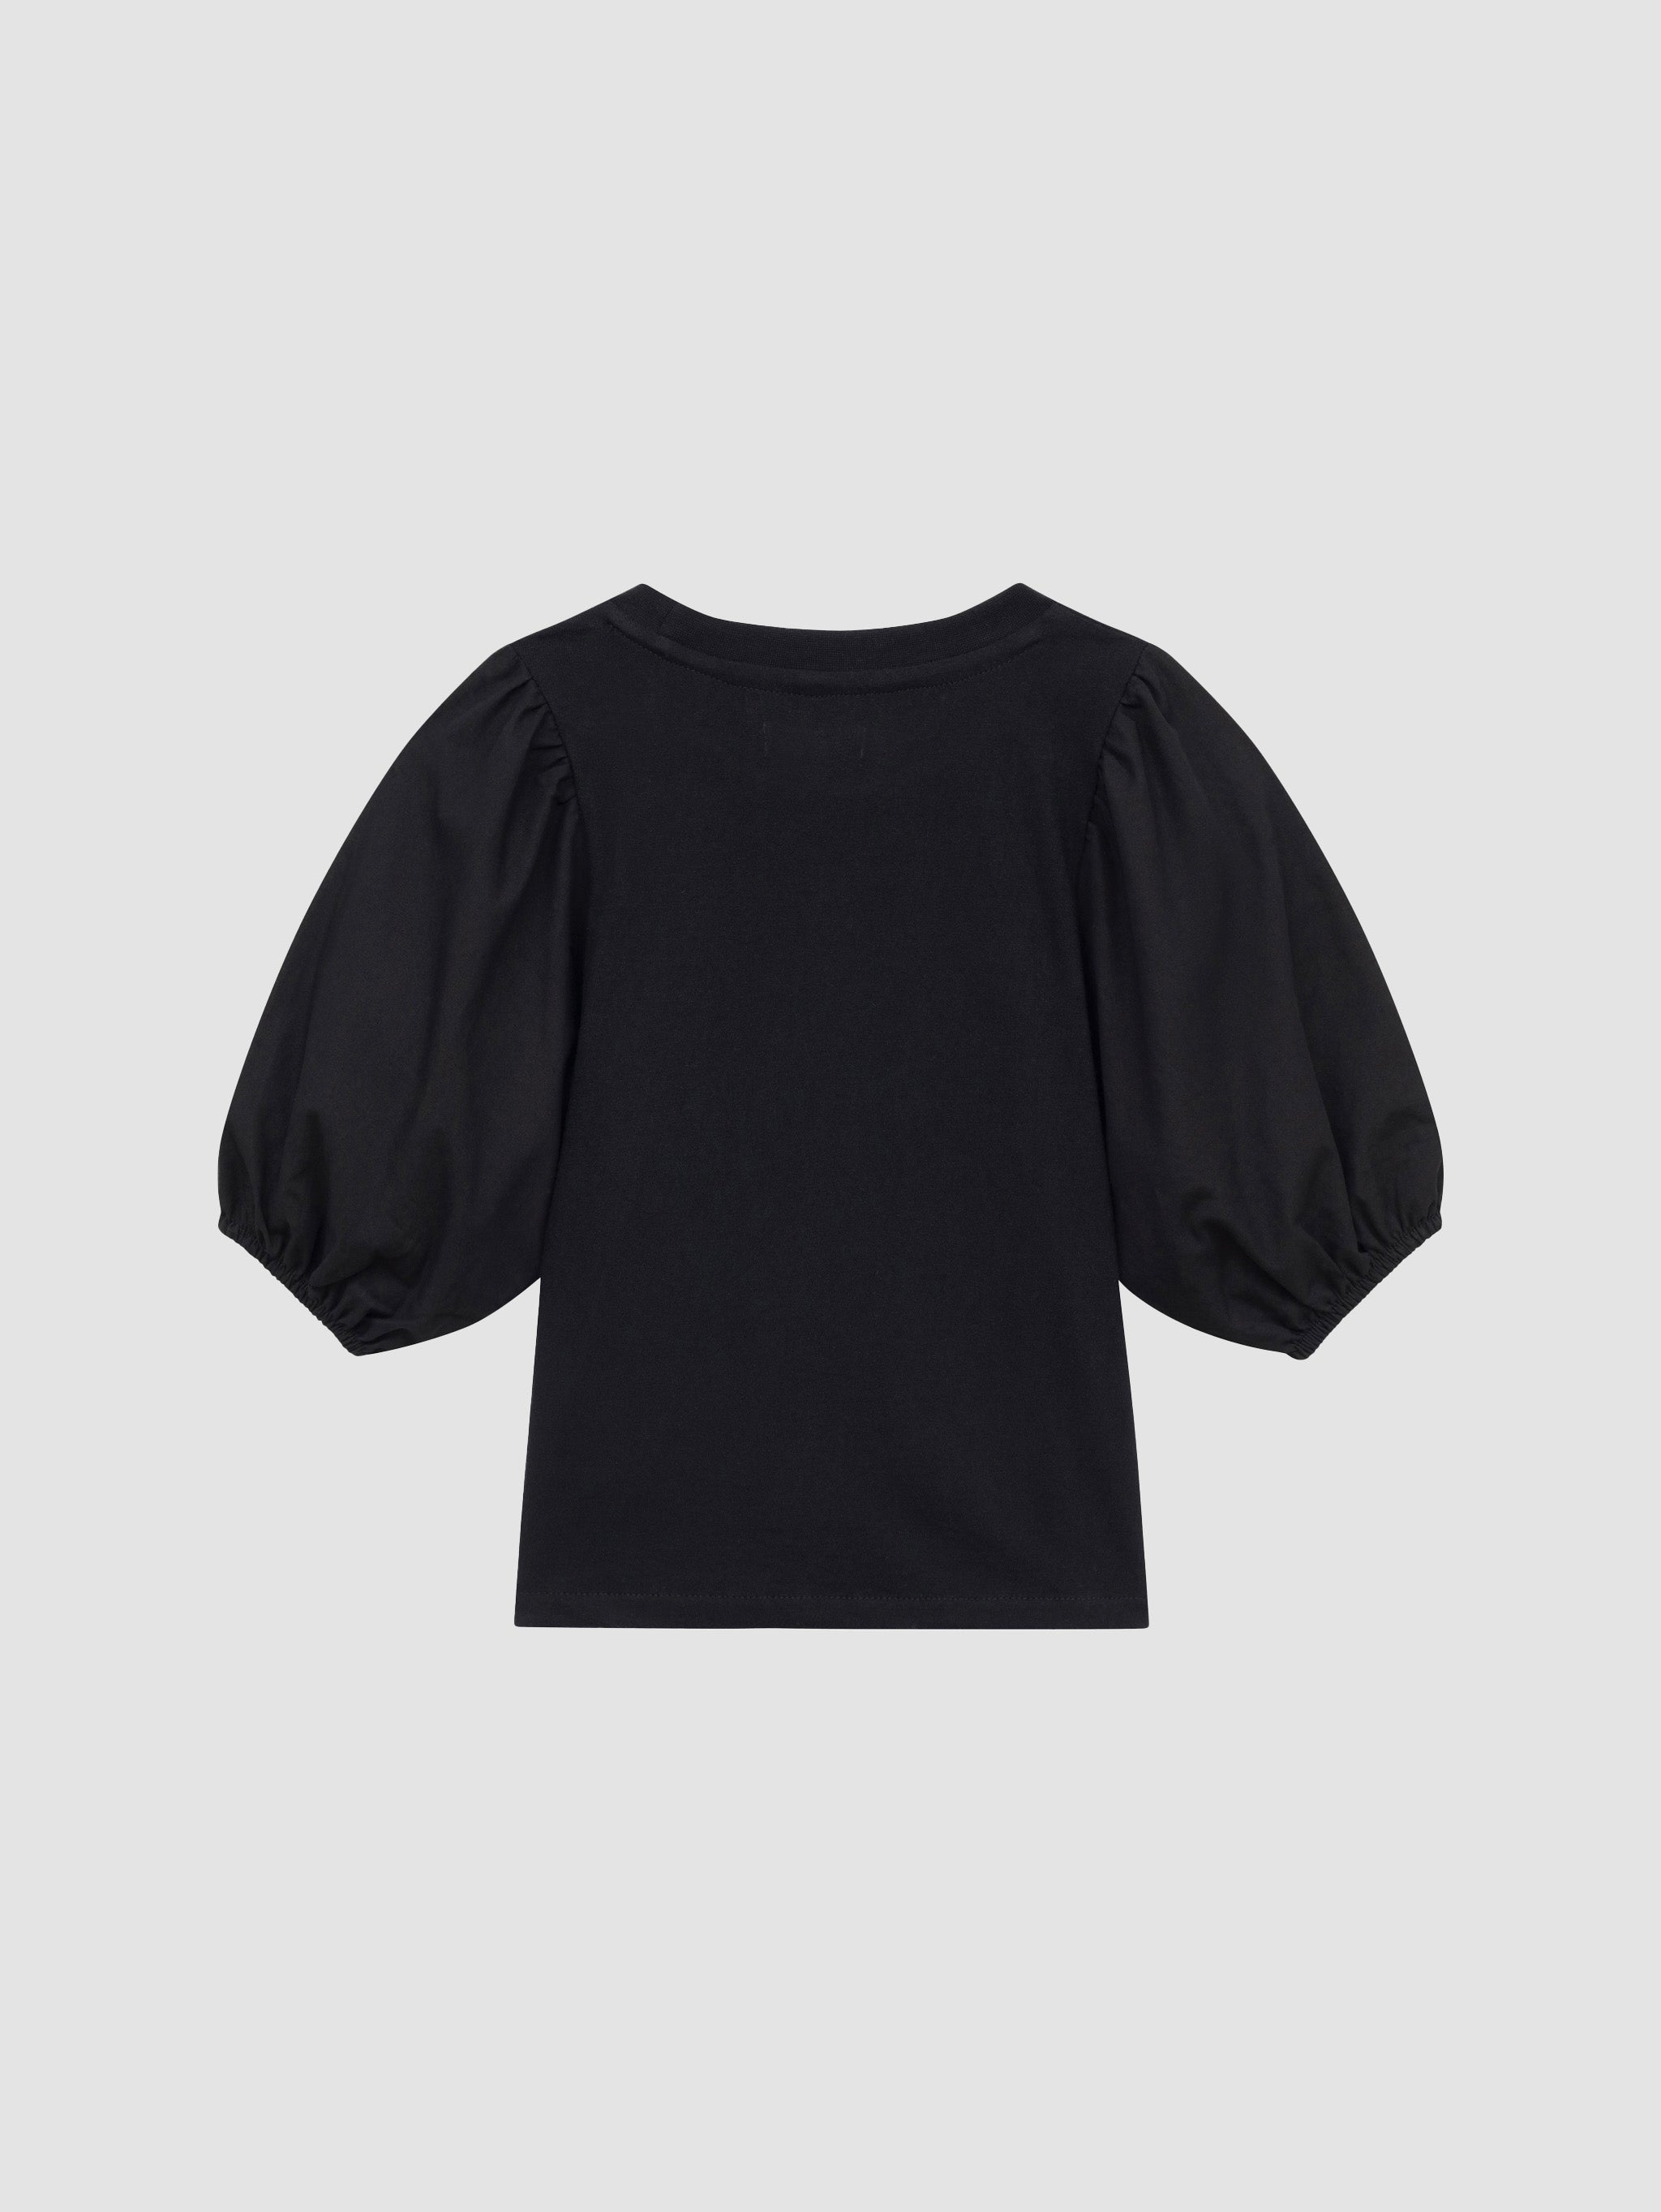 Kayla Shirt Short Sleeve Tee | Black